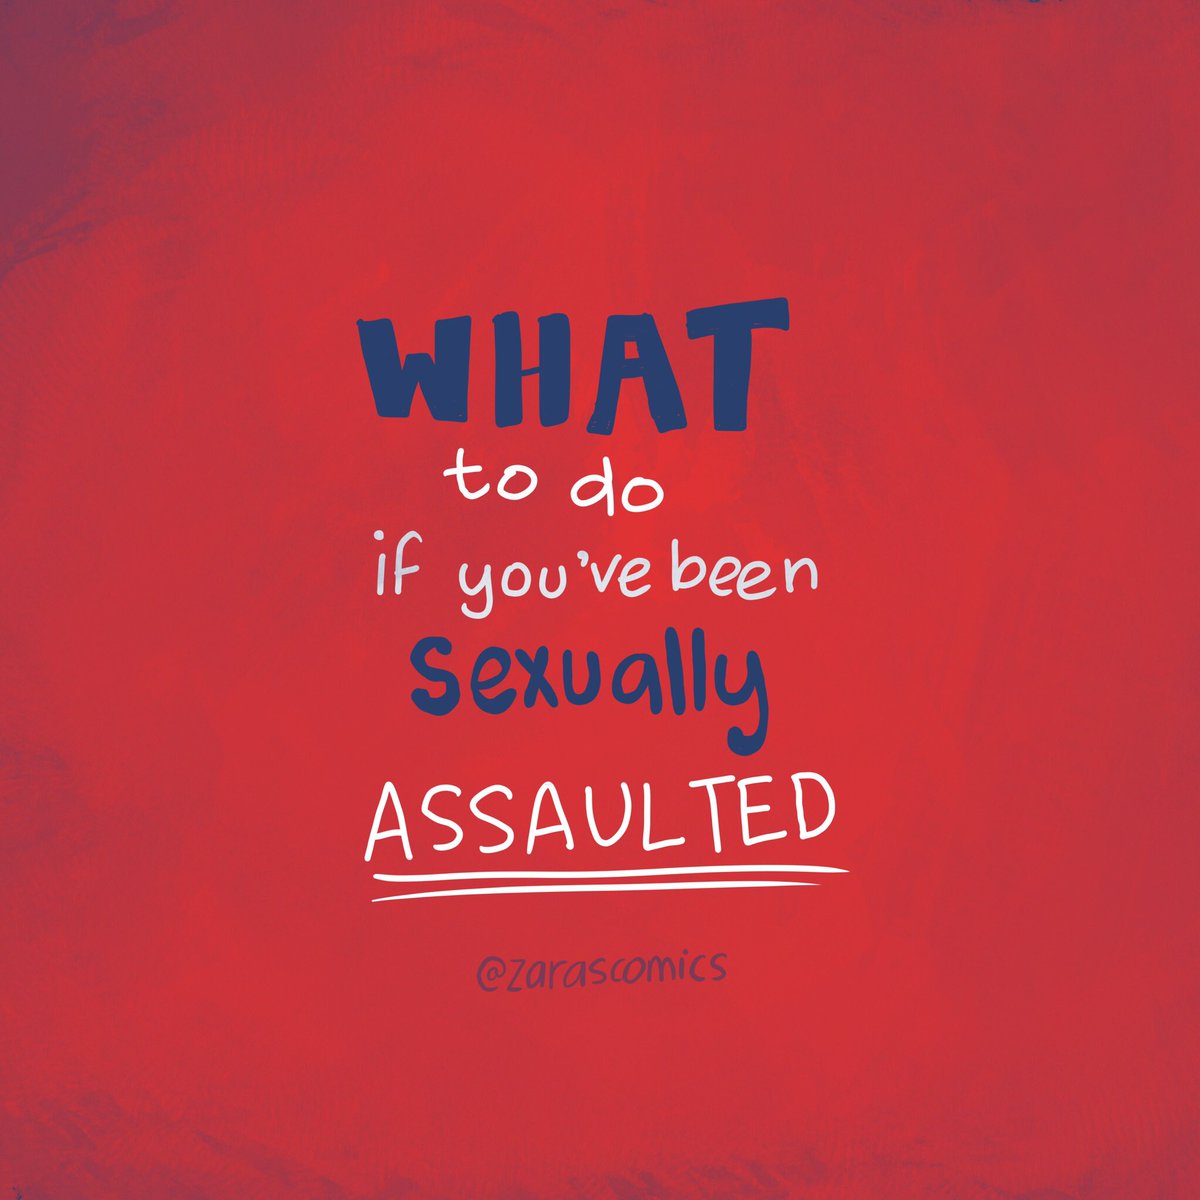 TRIGGER WARNING: Rape/sexual assault.

What to do if you’ve been sexually assaulted. 

#BelieveSurvivors #MeTooMv #EndVAW #sexualassault 

@nufoshey @raremoon14 @sara_naseem